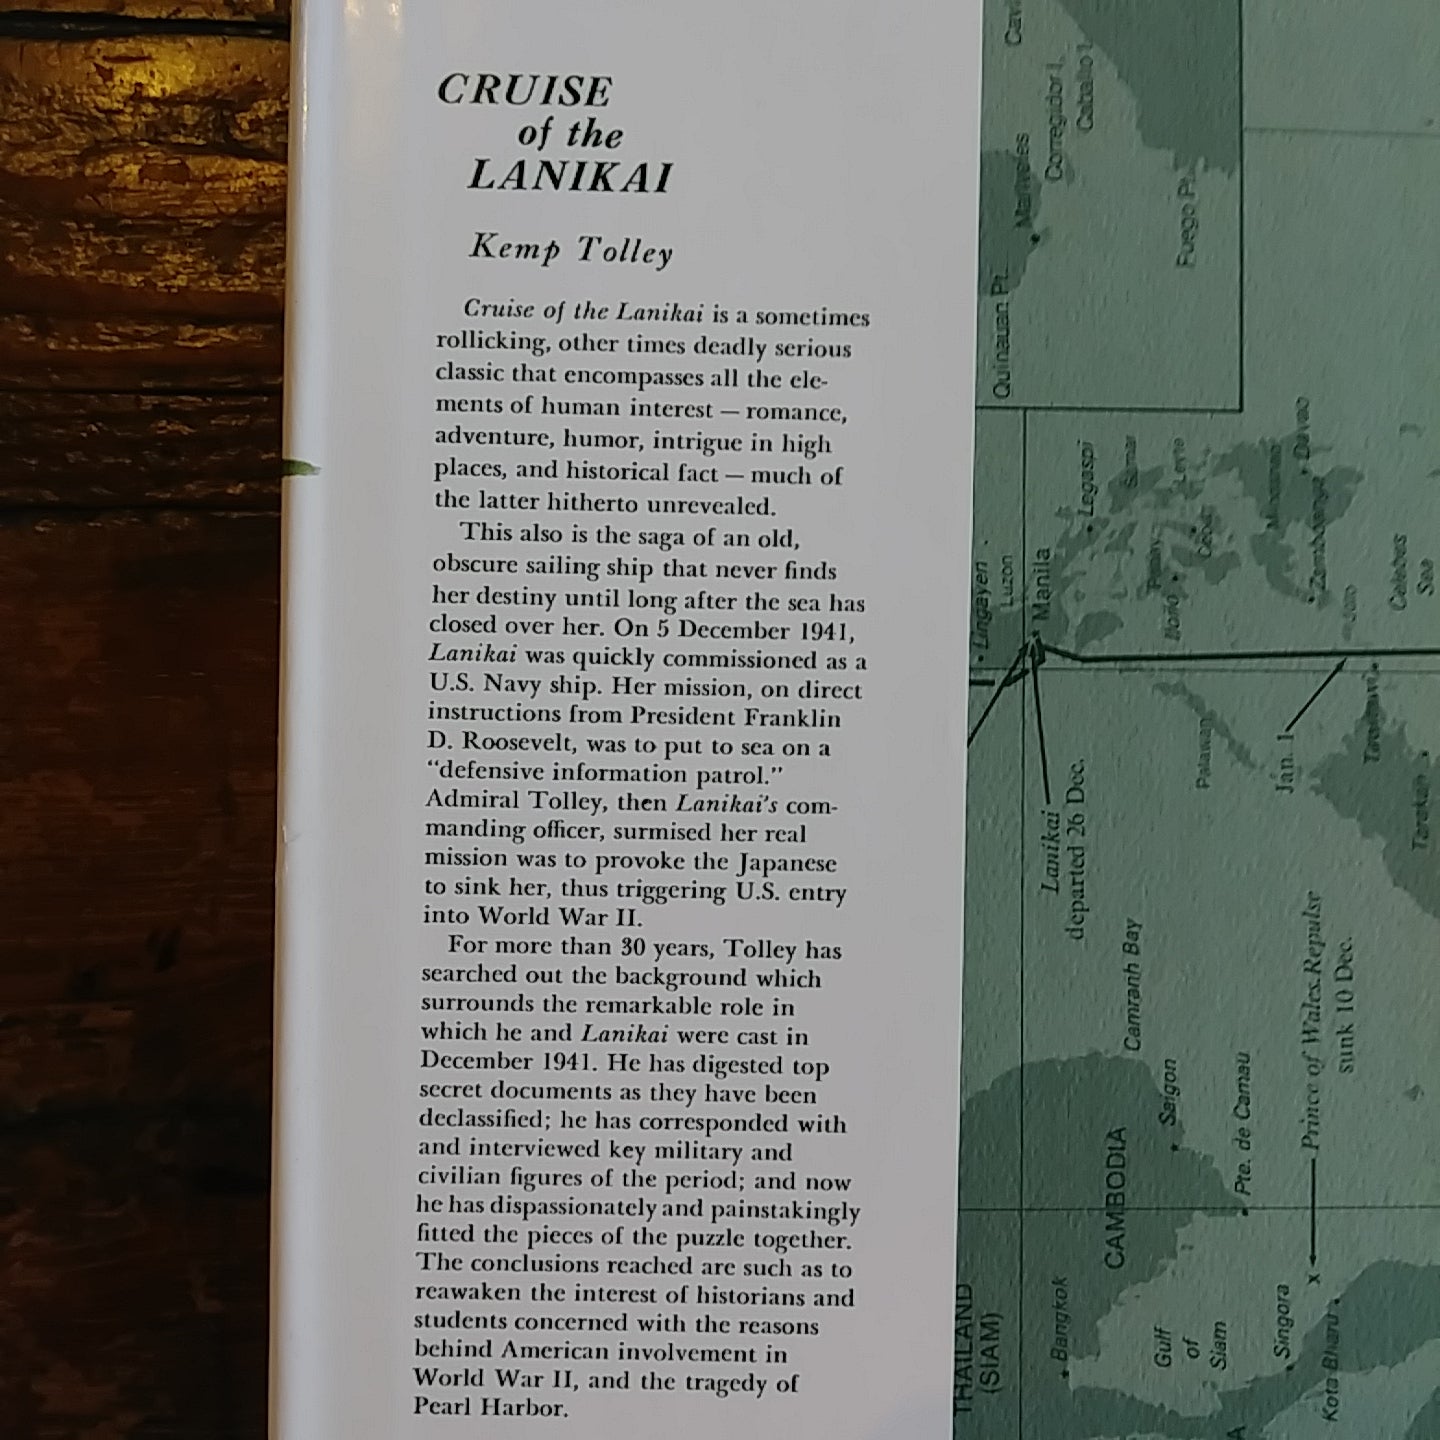 Book, "Cruise of the Lanikai - Incitement to War"